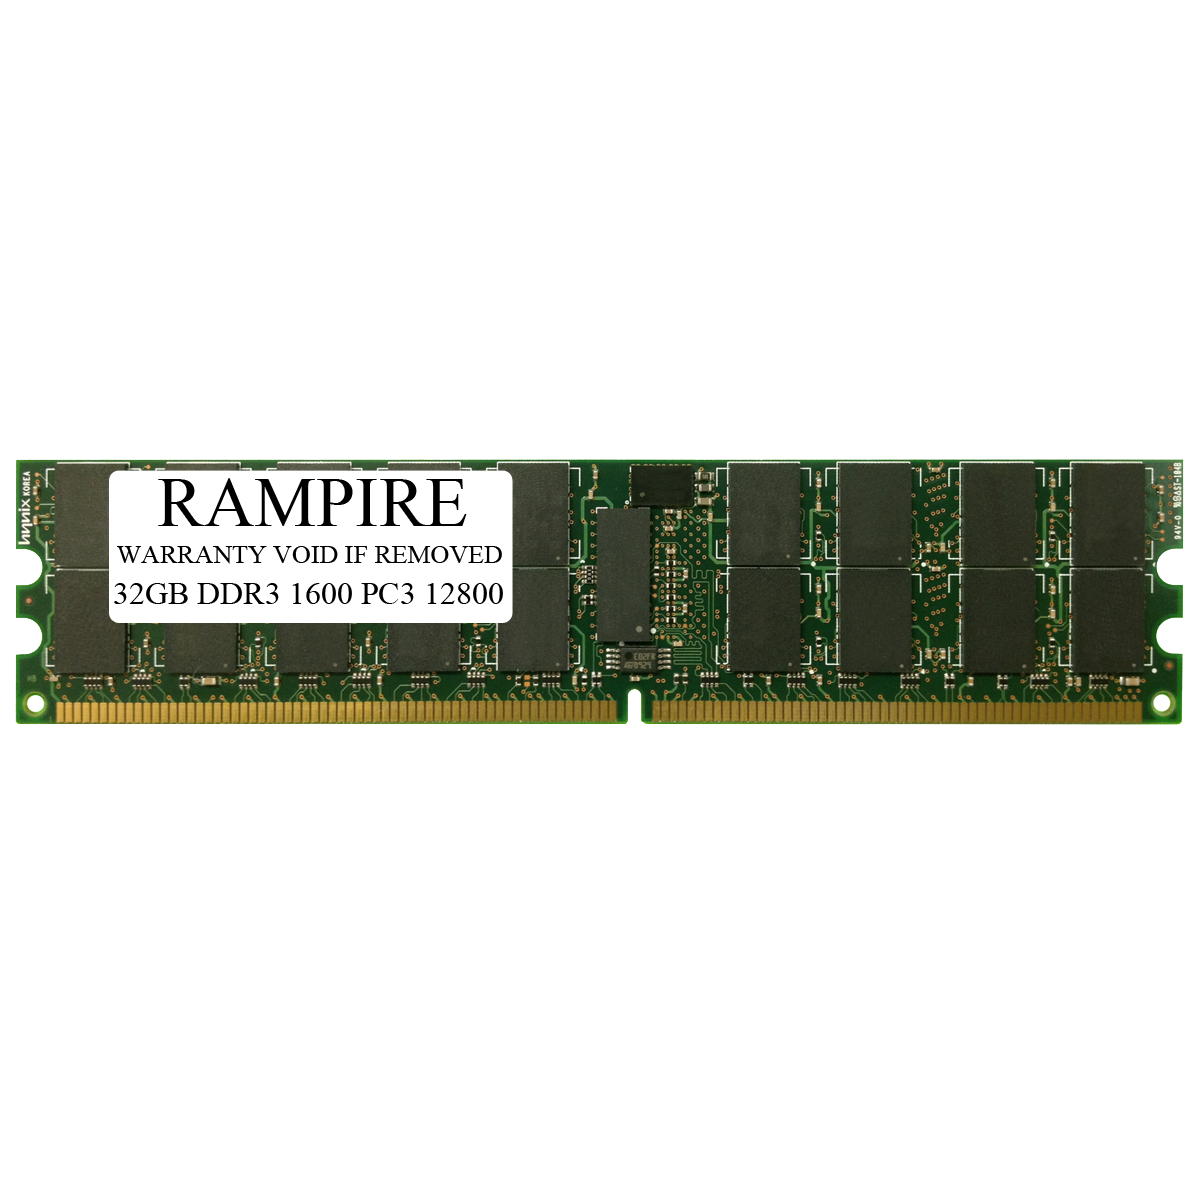 RAMPIRE 32GB DDR3 1600 (PC3 12800) 240-Pin SDRAM 4Rx4 Standard Profile 1.35V ECC Registered Server Memory